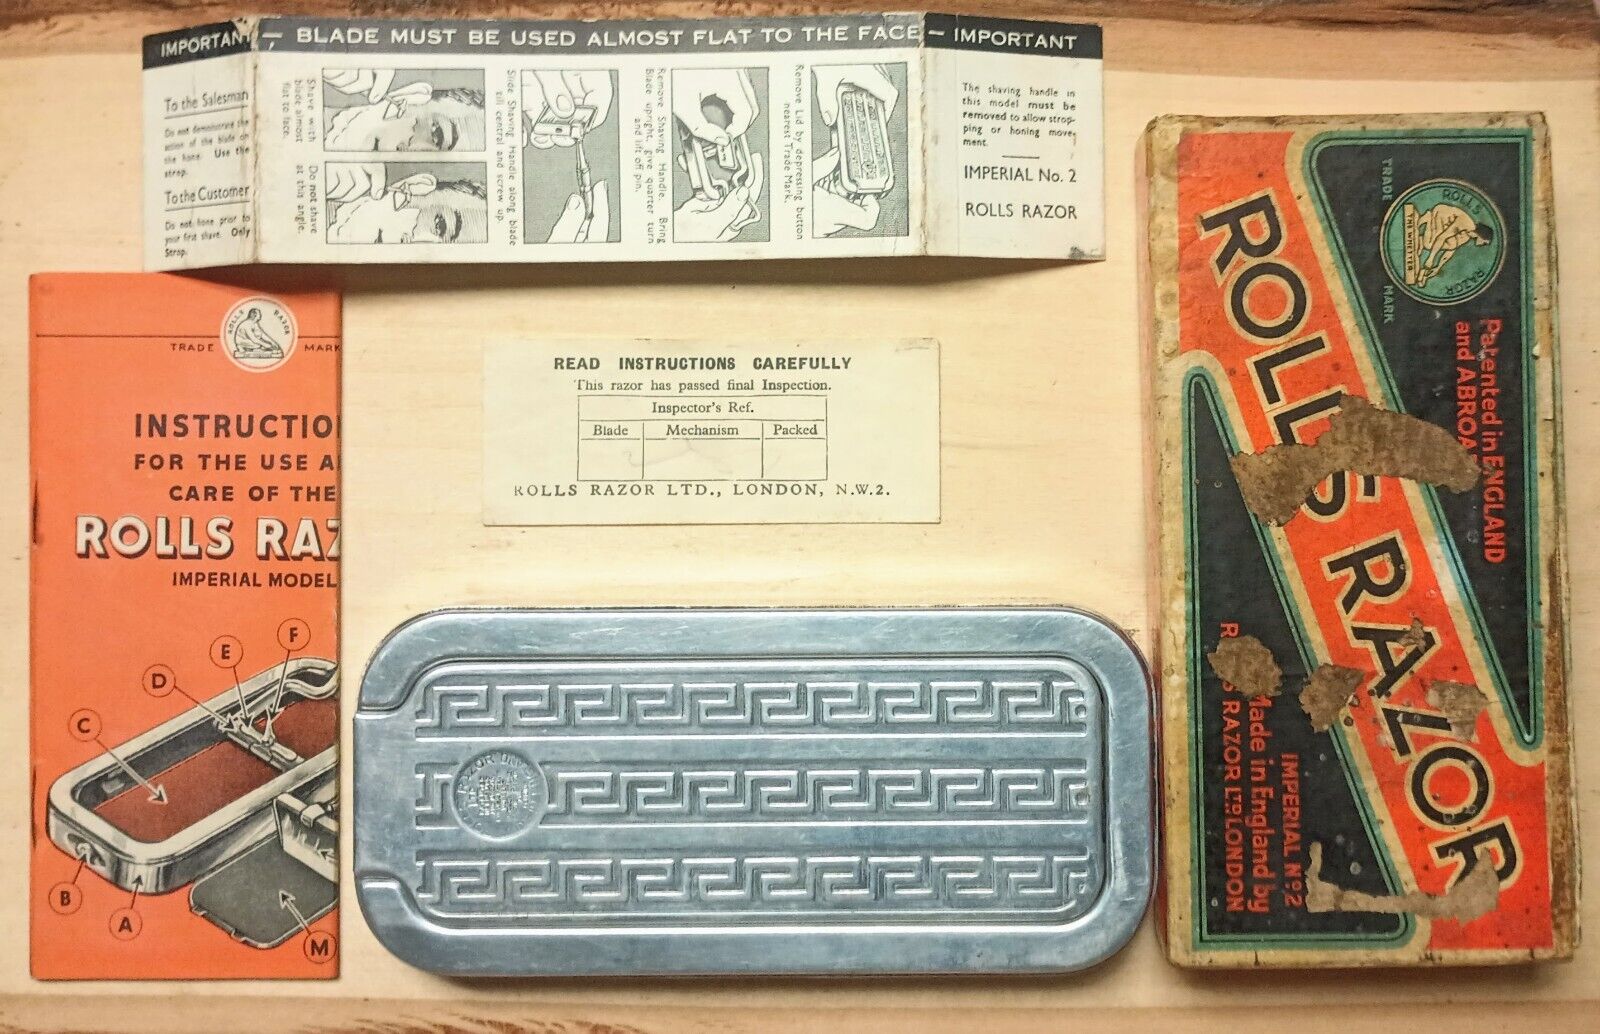 Rolls Razor Hollow Ground Imperial No 2 Vintage Safety Razor Kit In Original Box